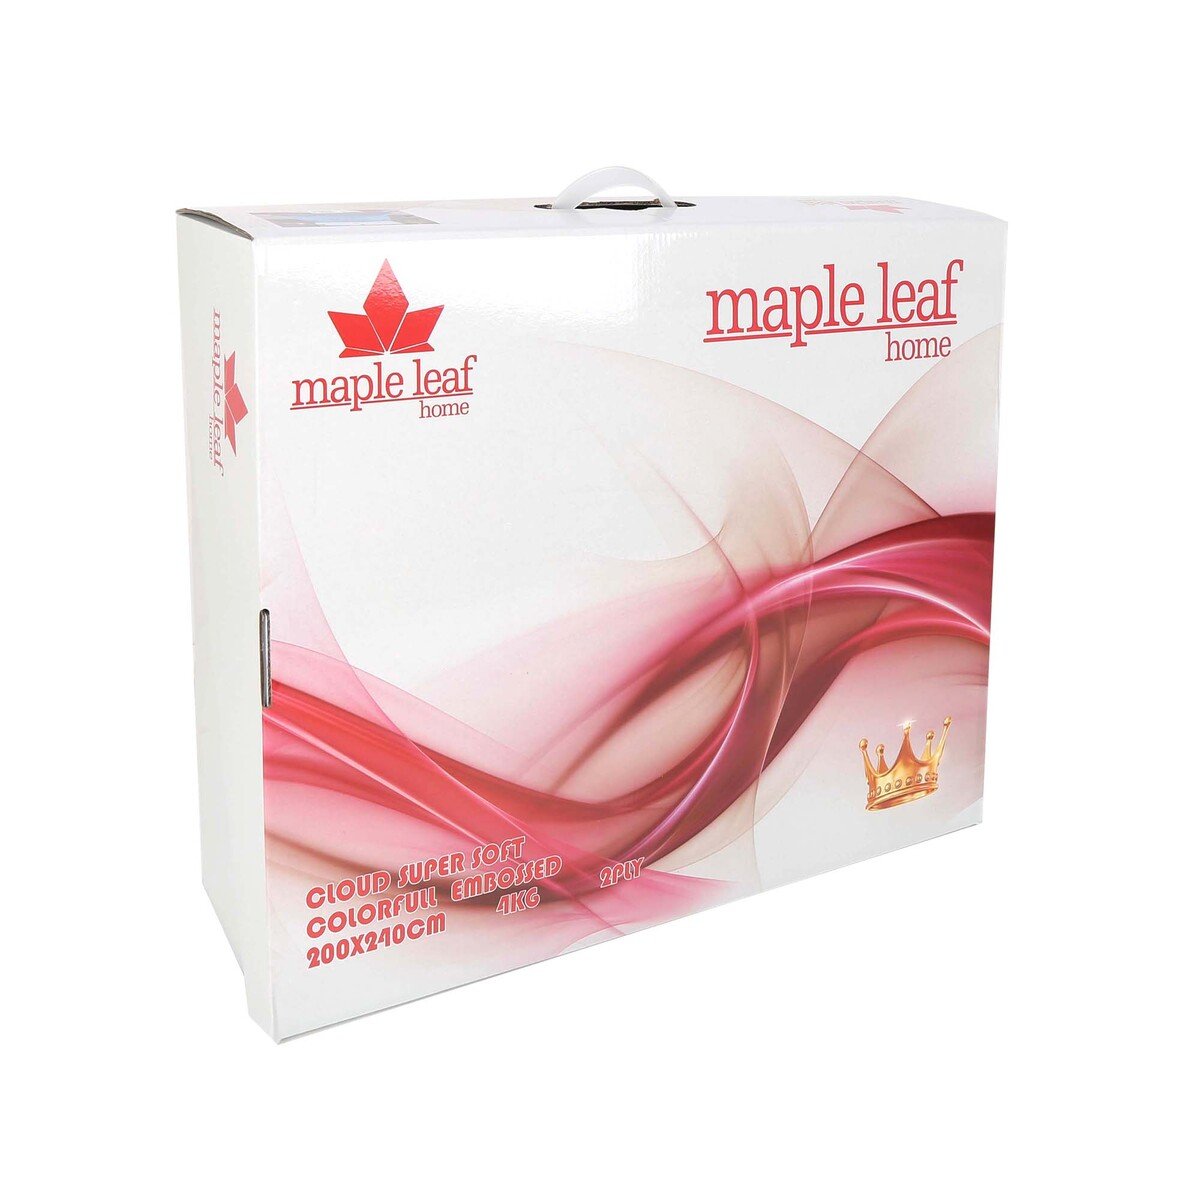 Maple leaf Microfiber Cloudy Blanket 200x240cm Assorted